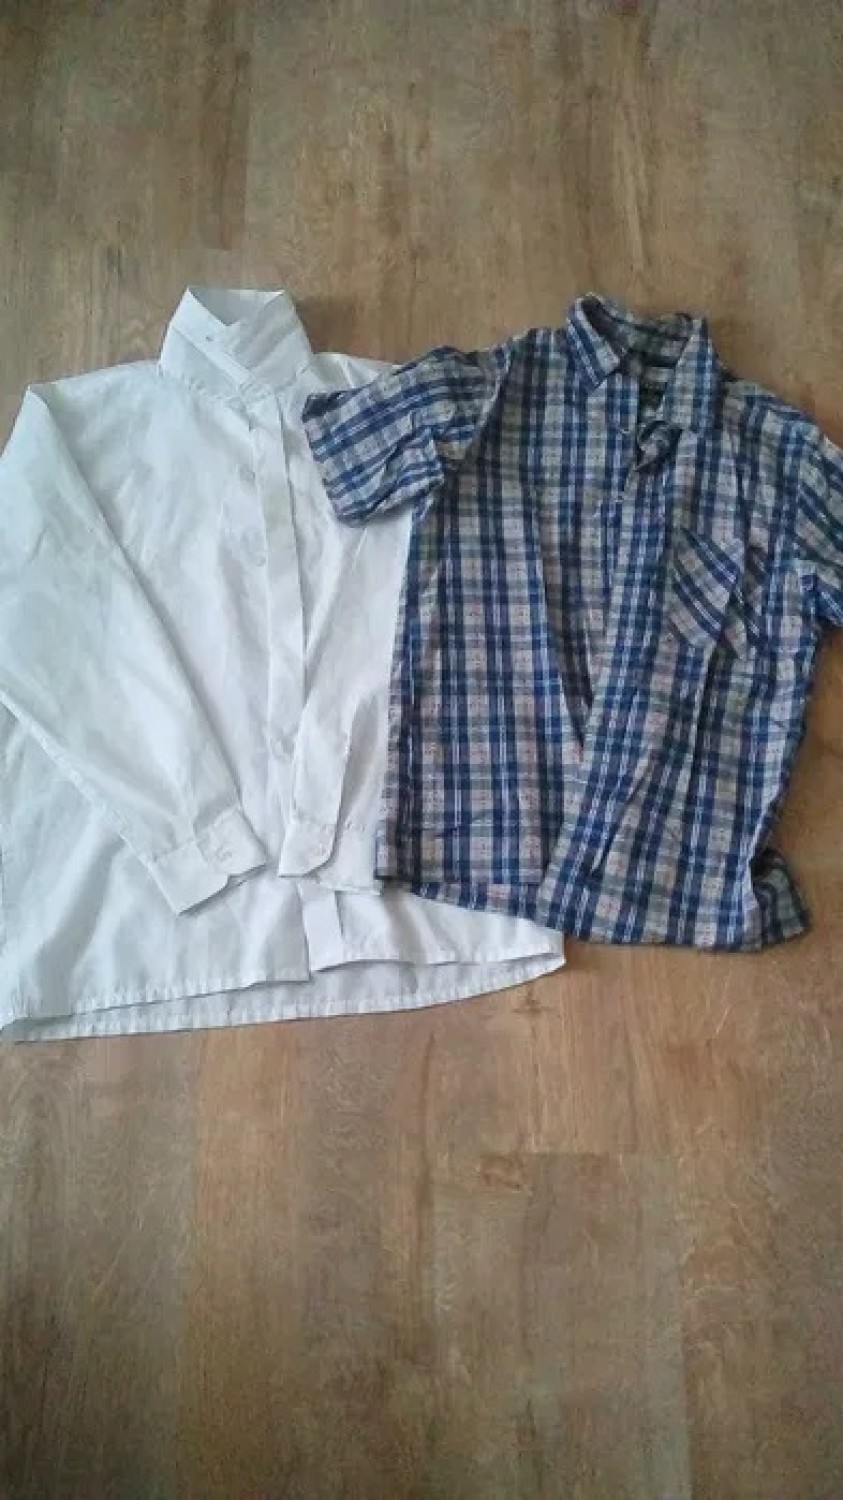 Dwie koszule dla chlopca
Oddam dwie koszule dla chlopca
Stan...